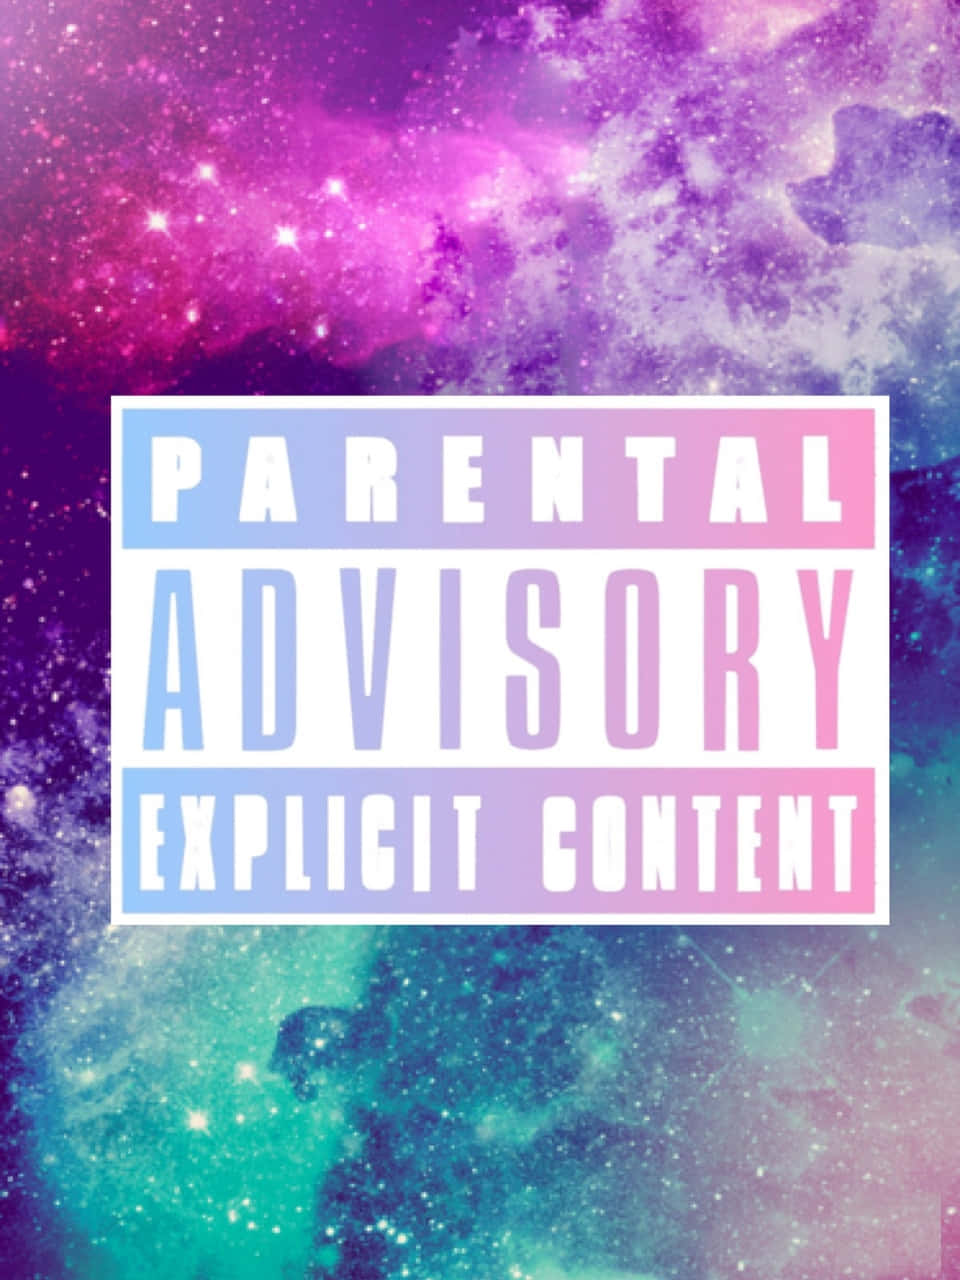 parental advisory iphone wallpaper